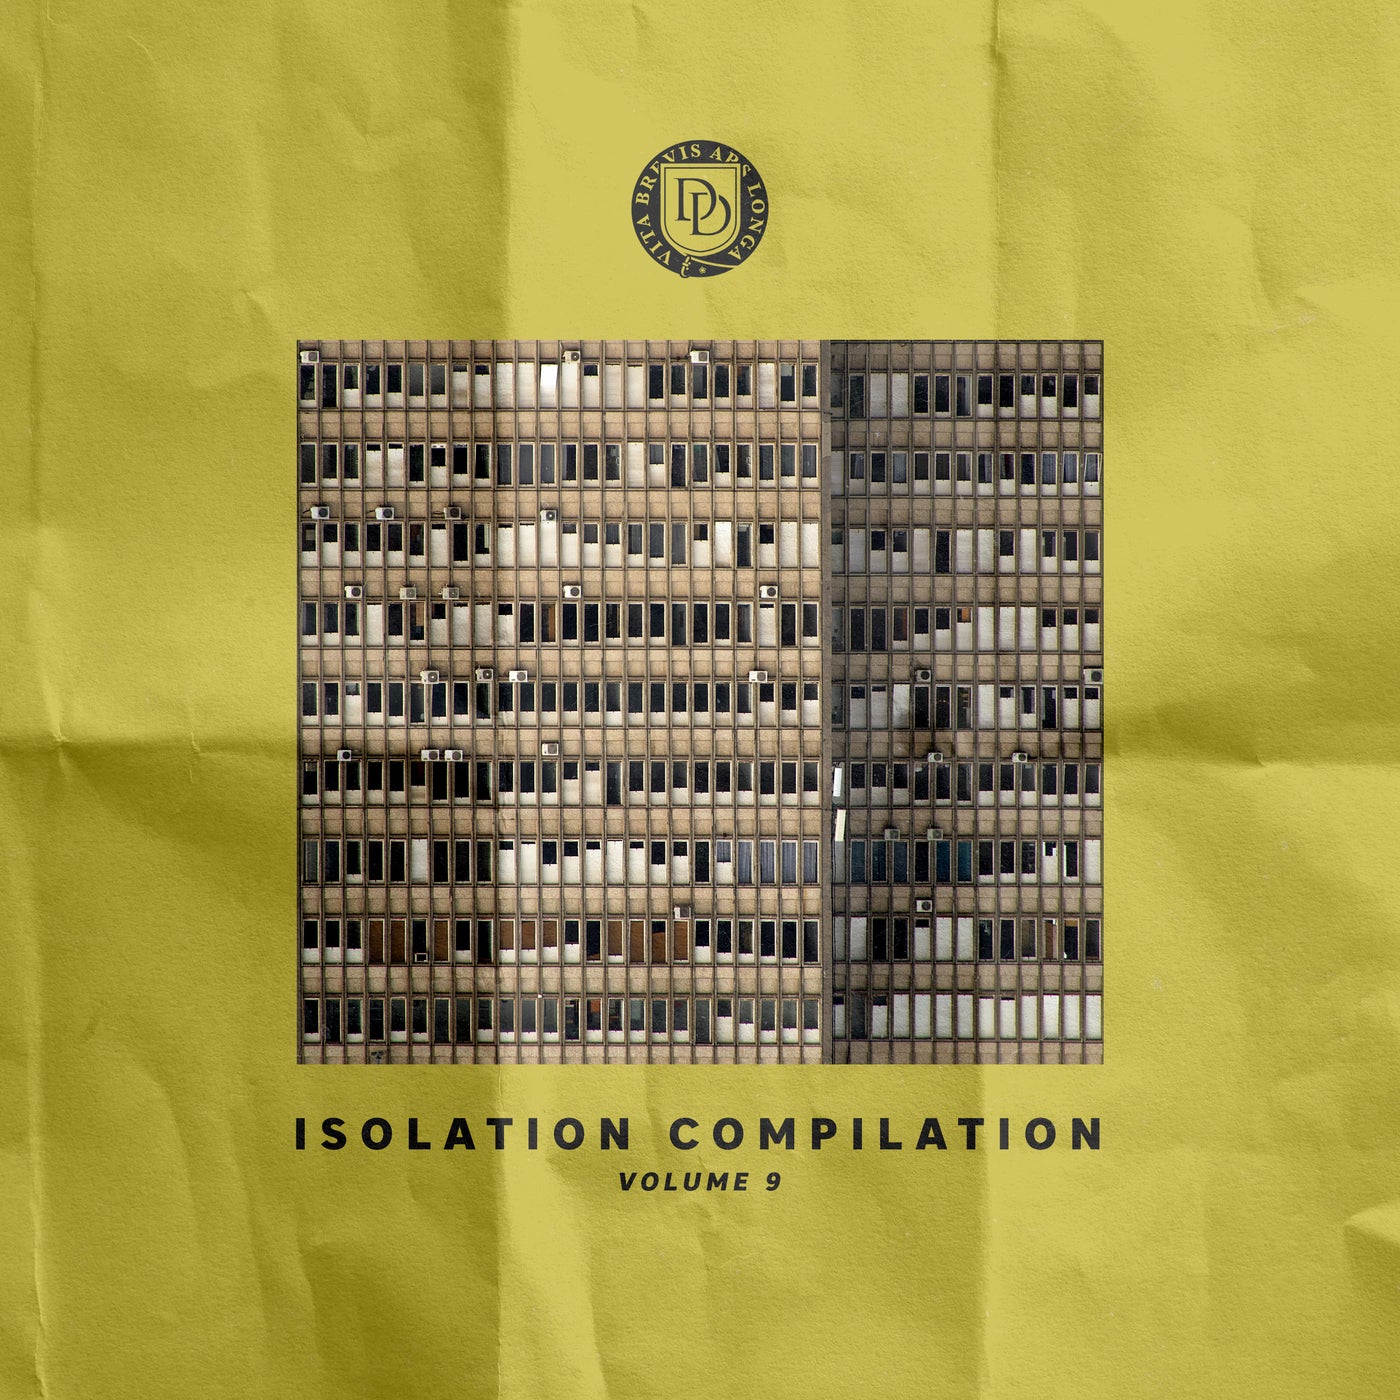 VA - ISOLATION COMPILATION VOLUME 9 [DDIC009]